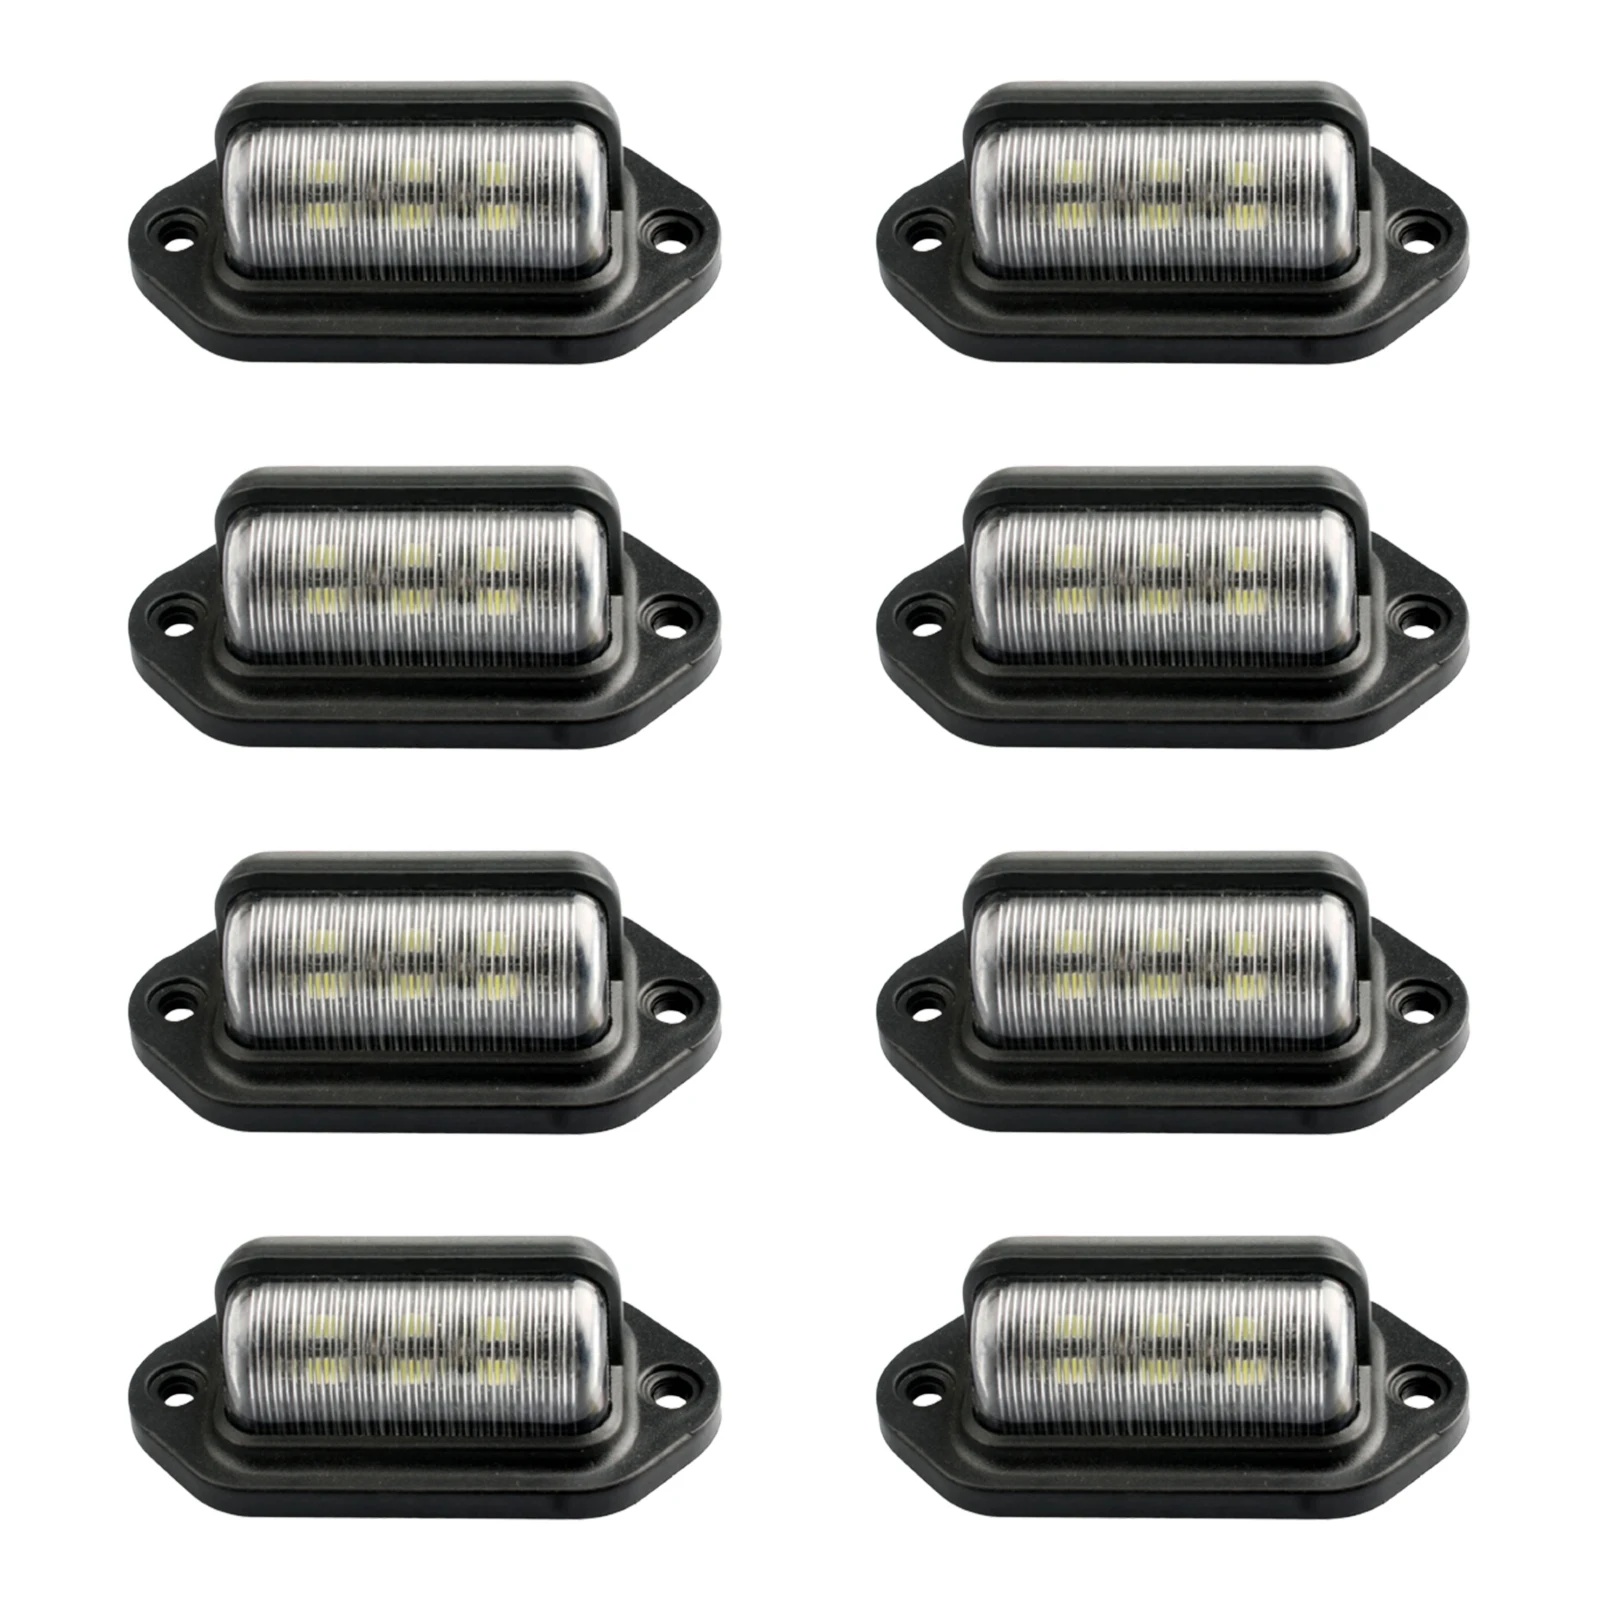 

8pcs Taillight 6 LEDs License Plate Light for Truck SUV Trailer Van RV Trucks Boat Bright Light Waterproof Car Signal Lamp